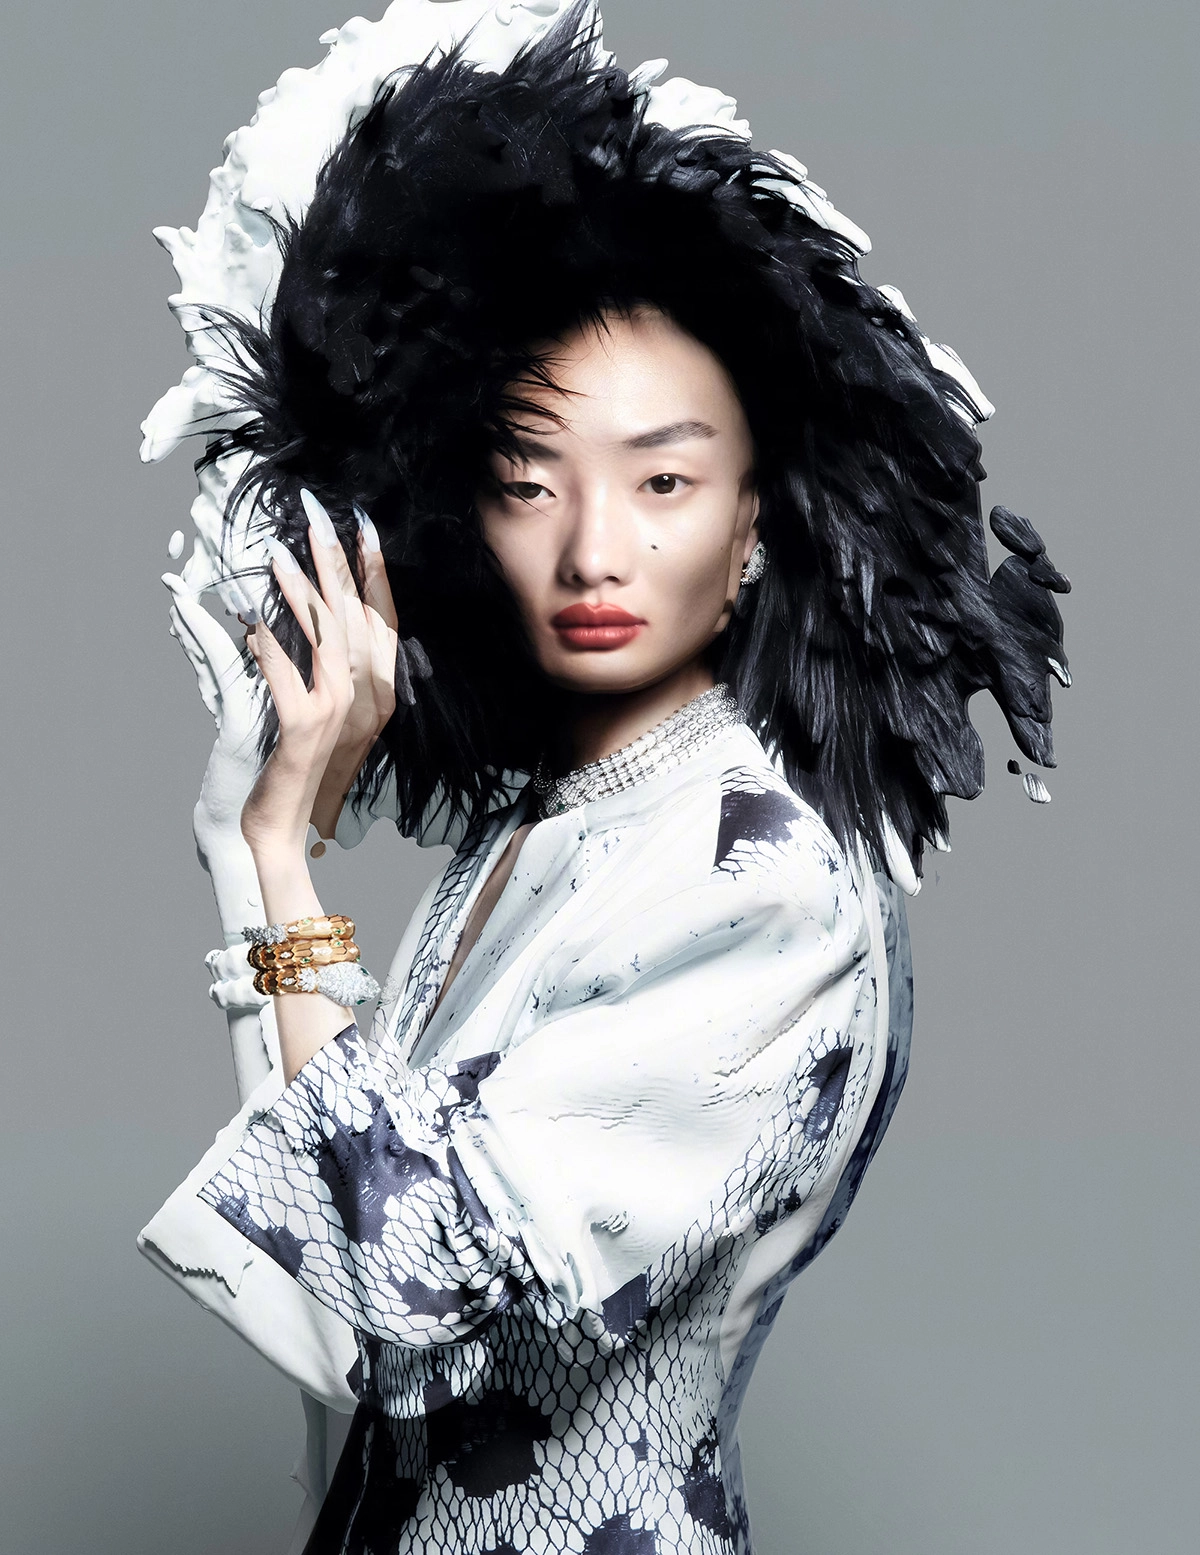 Vogue China September 2022 cover by Sølve Sundsbø